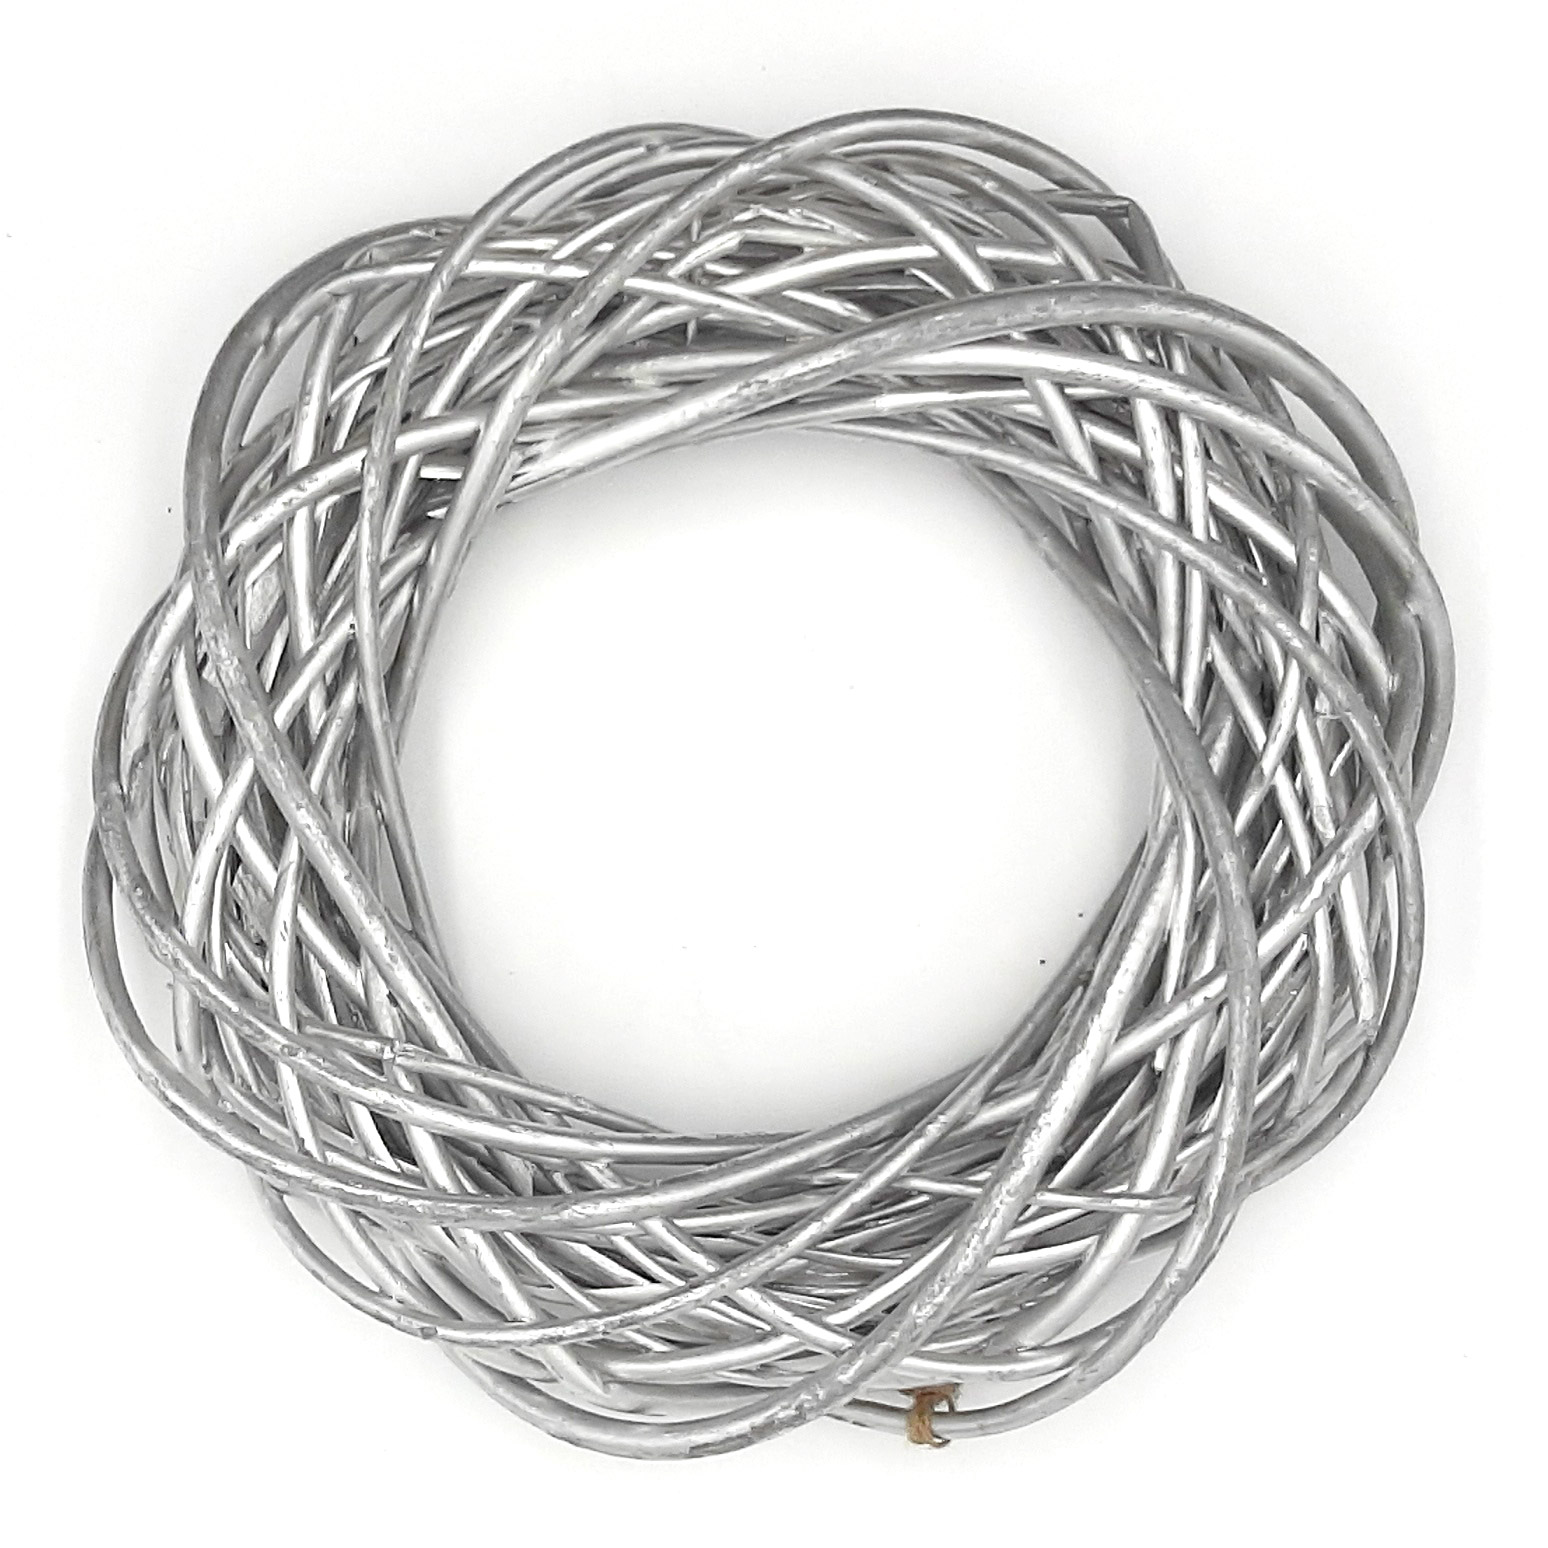 Ghirlanda argento di rami intrecciati - Ø 28 cm